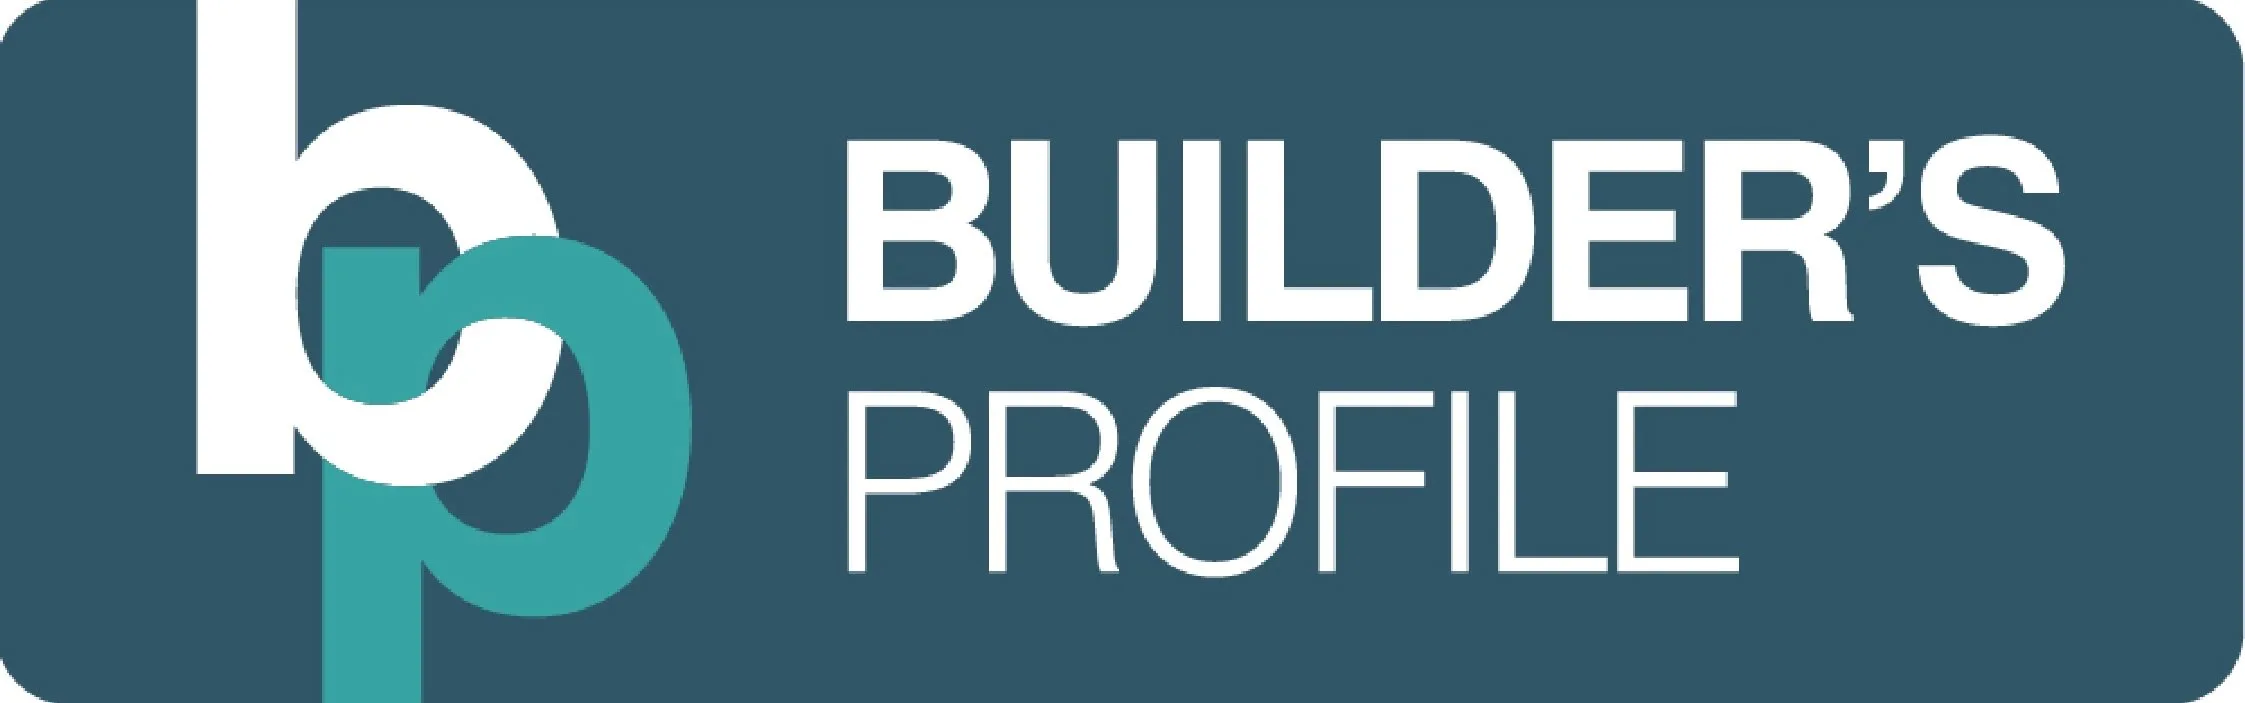 MGD Builders Profile Accreditation